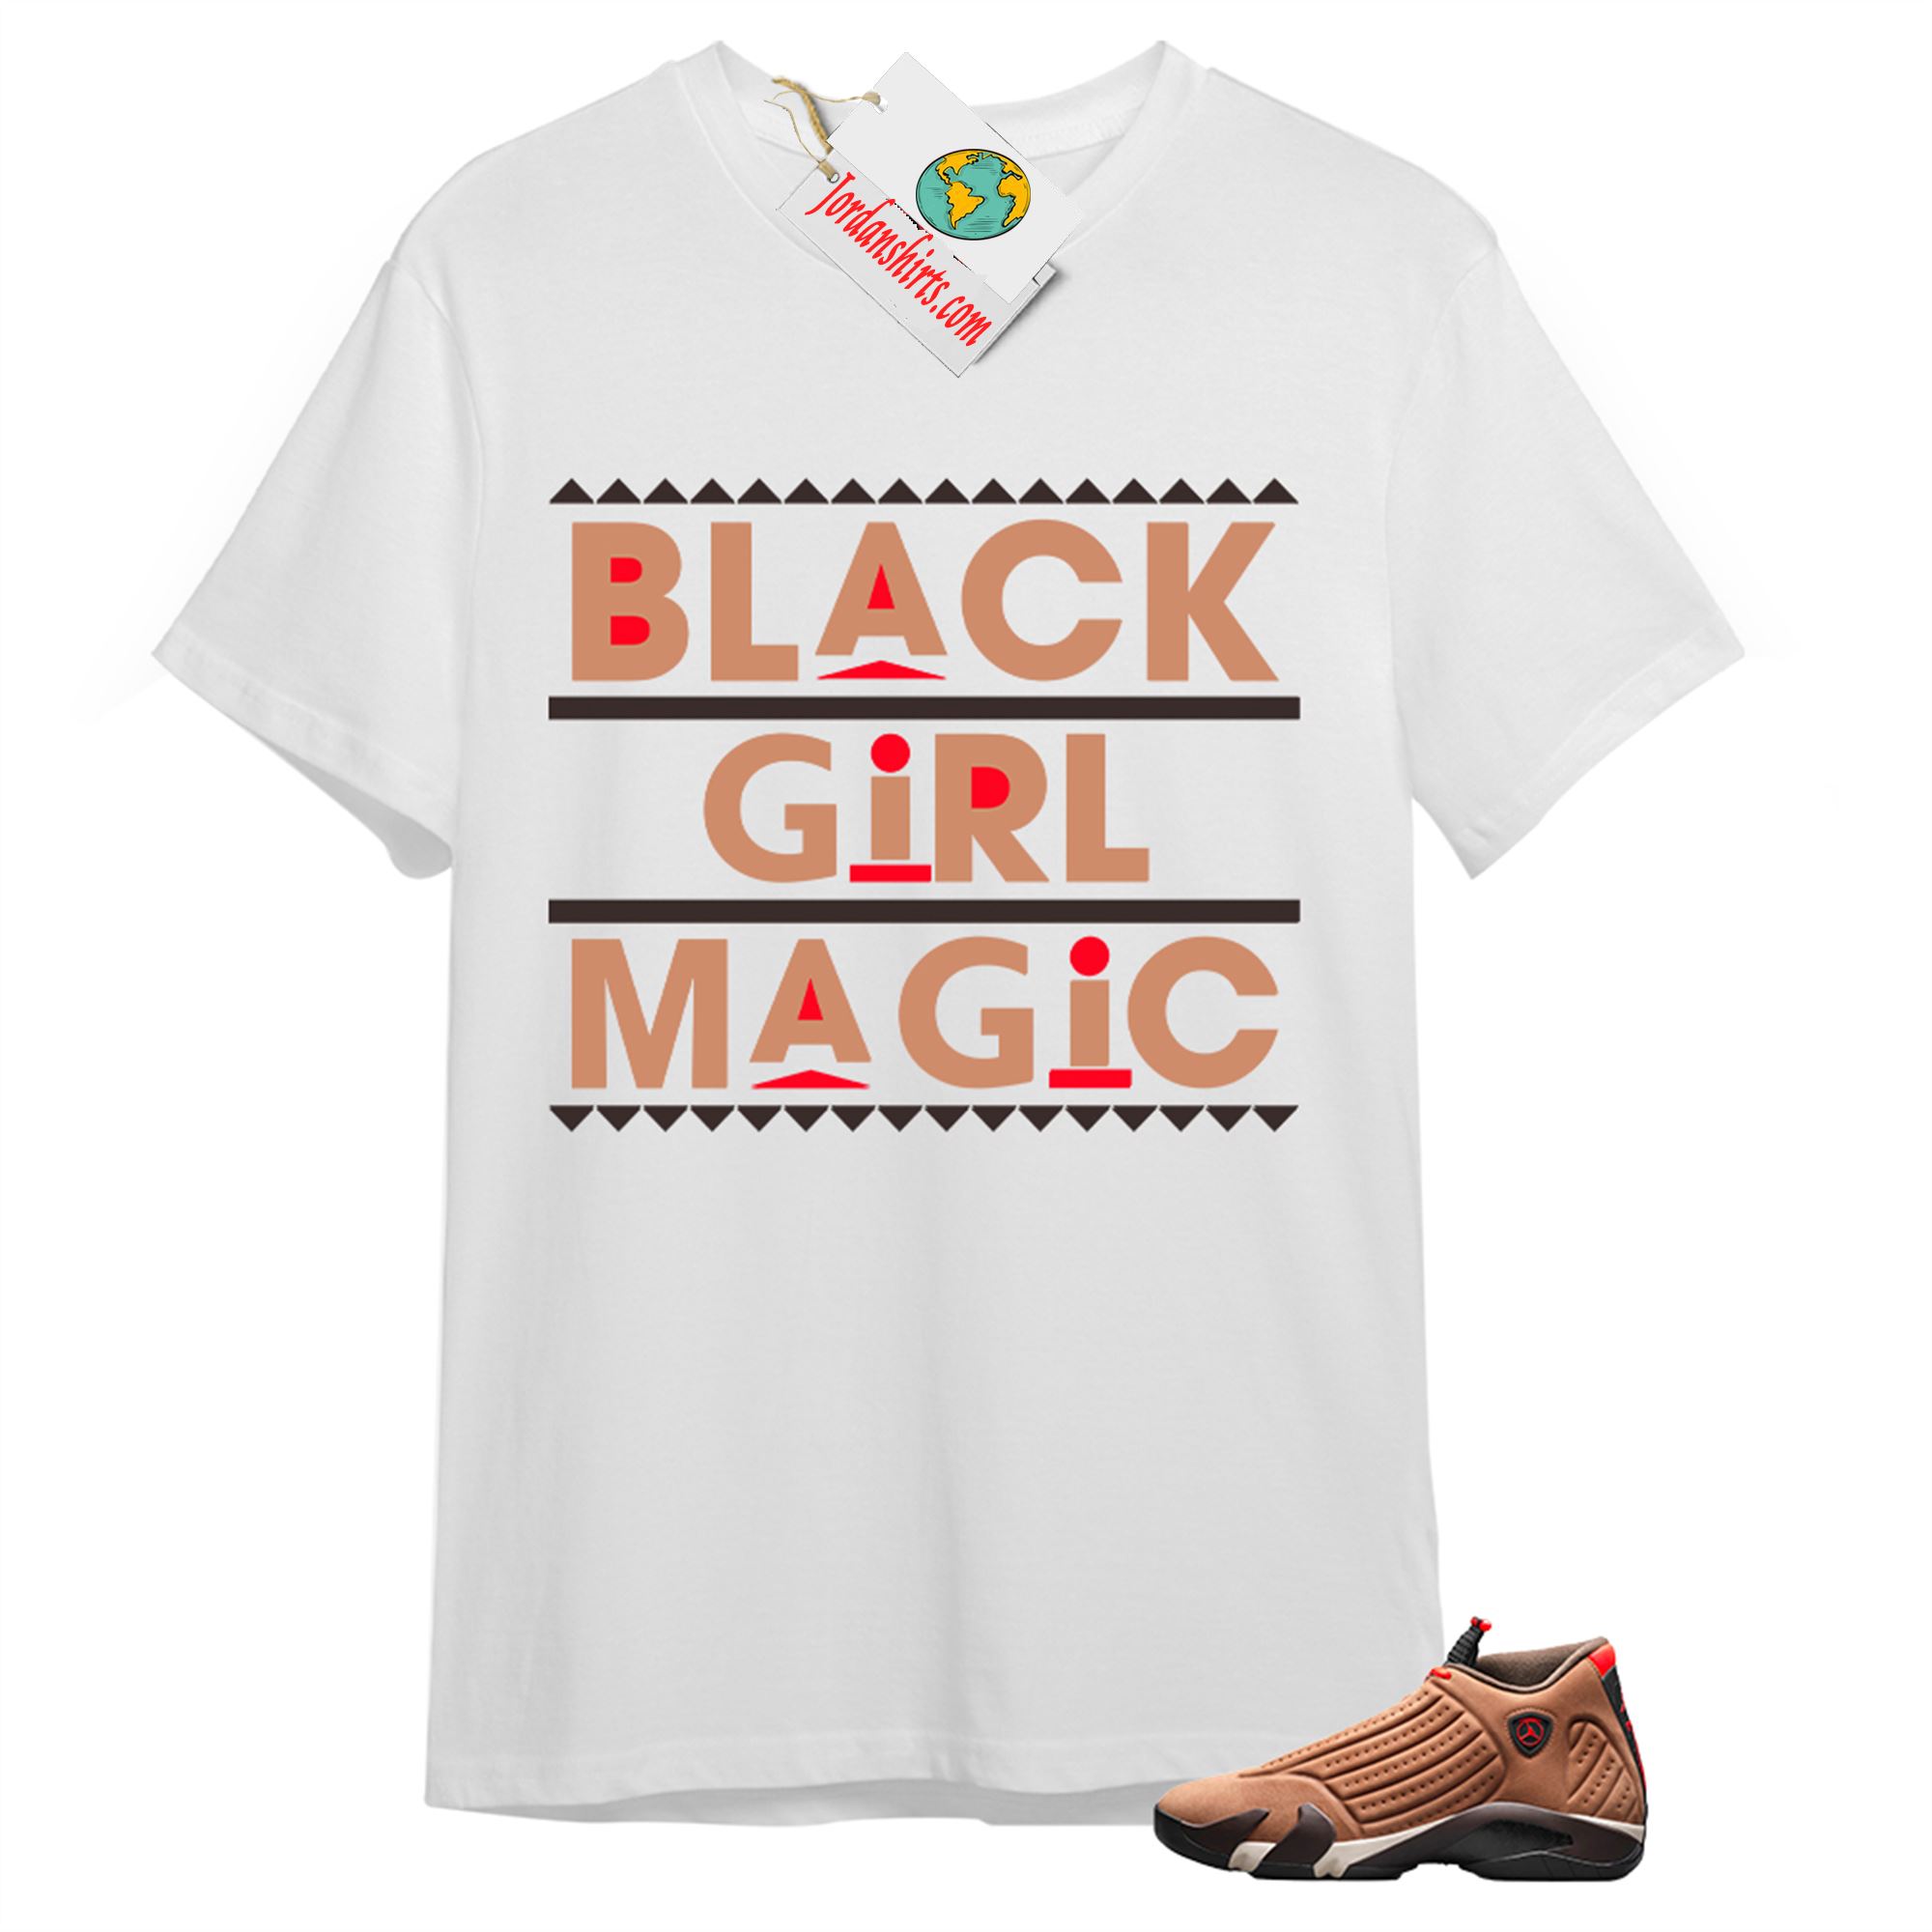 Jordan 14 Shirt, Black Girl Magic White T-shirt Air Jordan 14 Winterized 14s Plus Size Up To 5xl